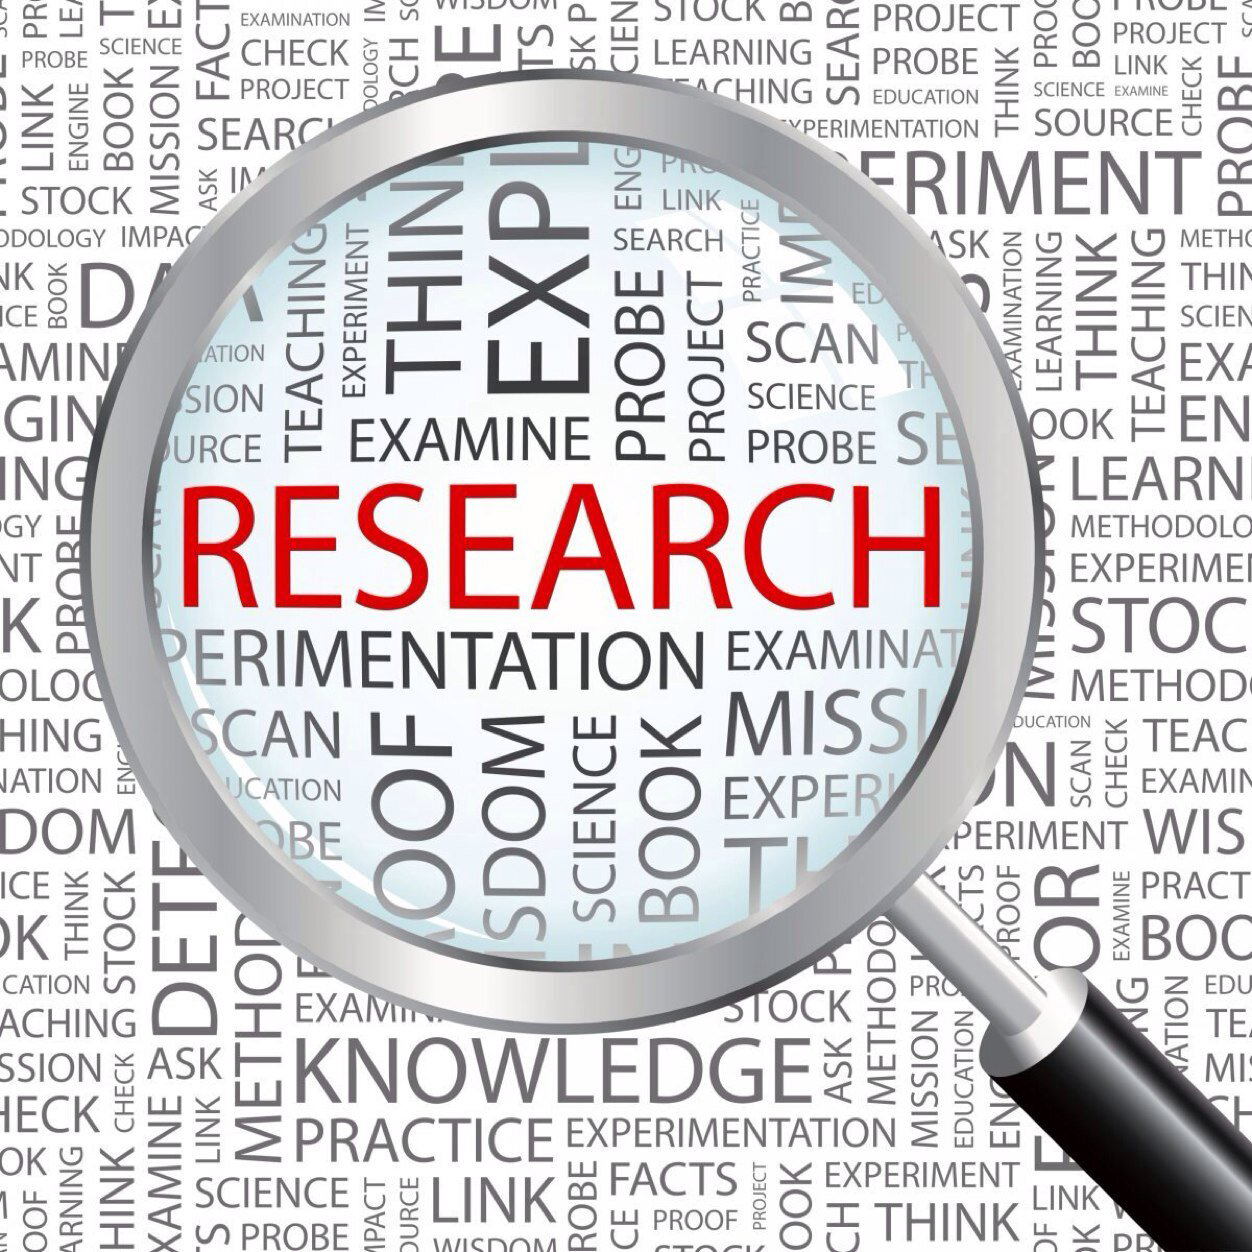 Biostatistics, Digital Analytics and Research Methodology